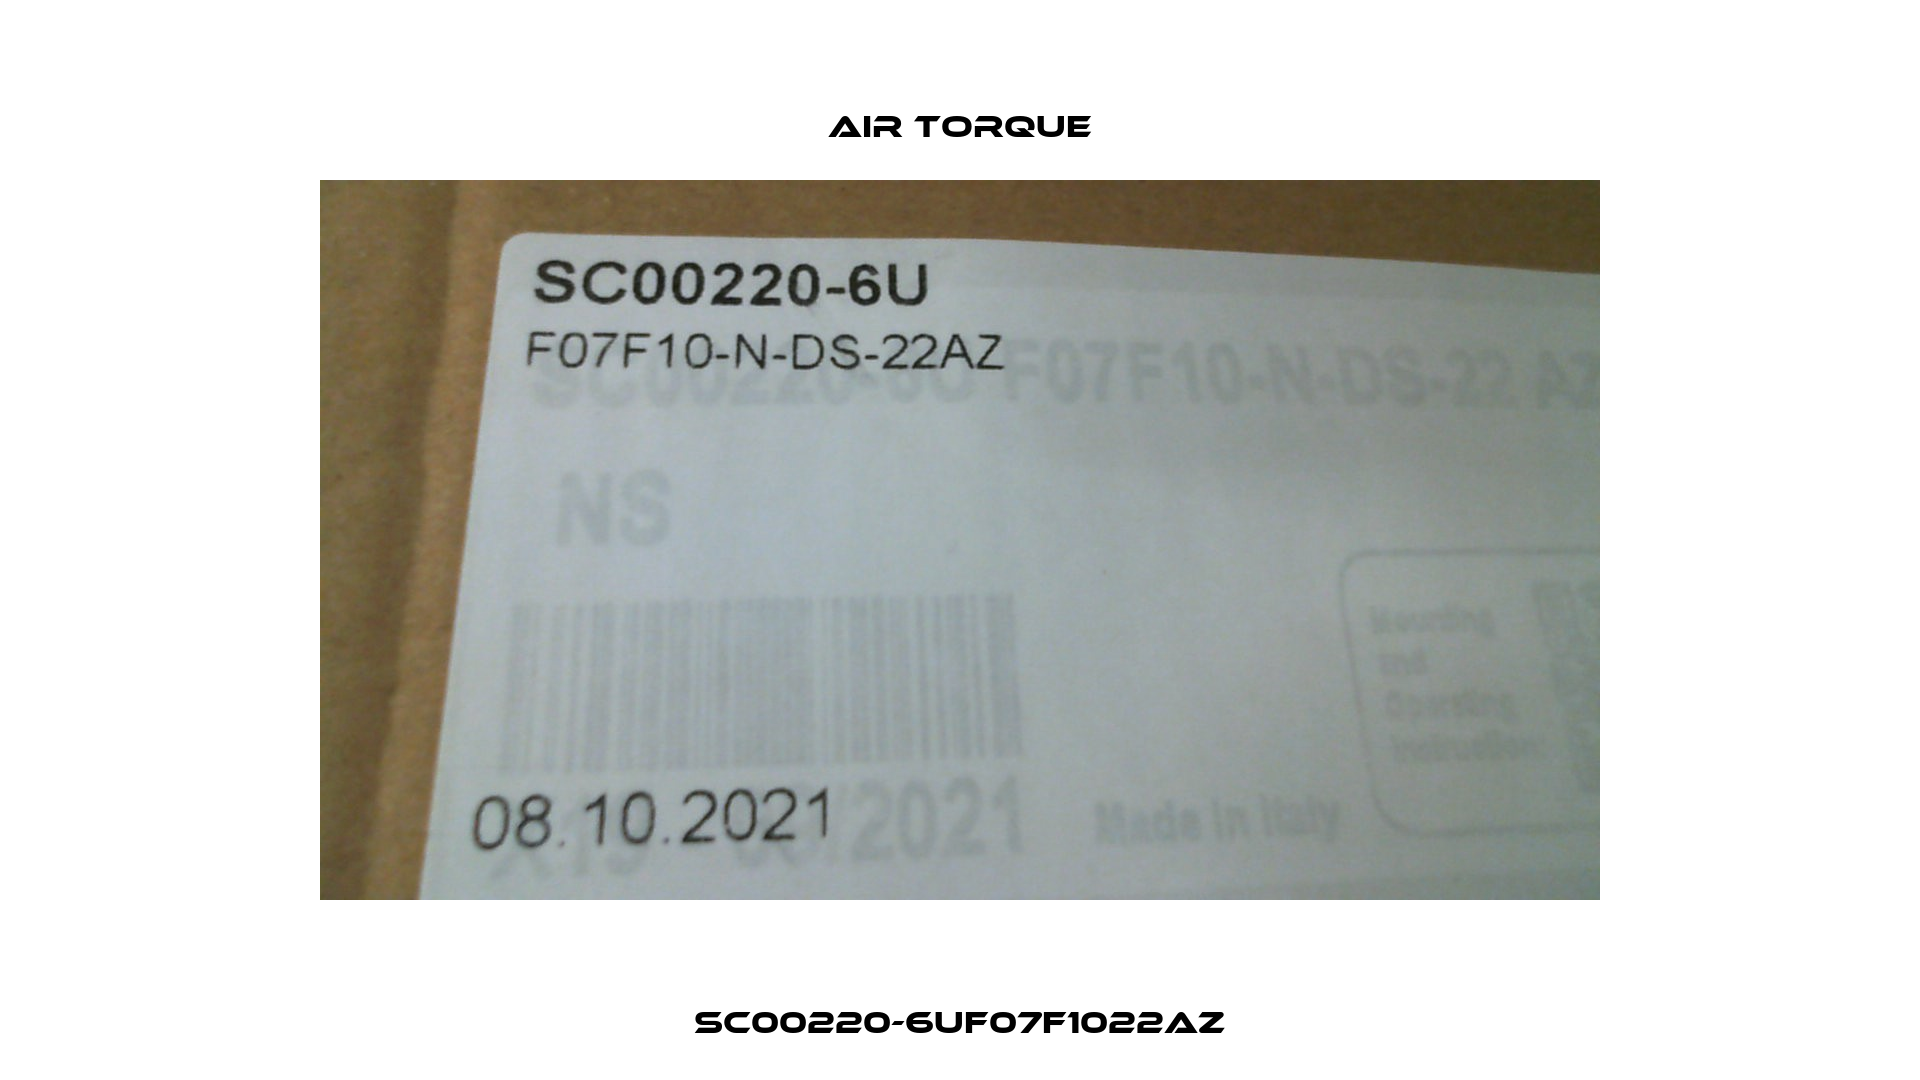 SC00220-6UF07F1022AZ Air Torque